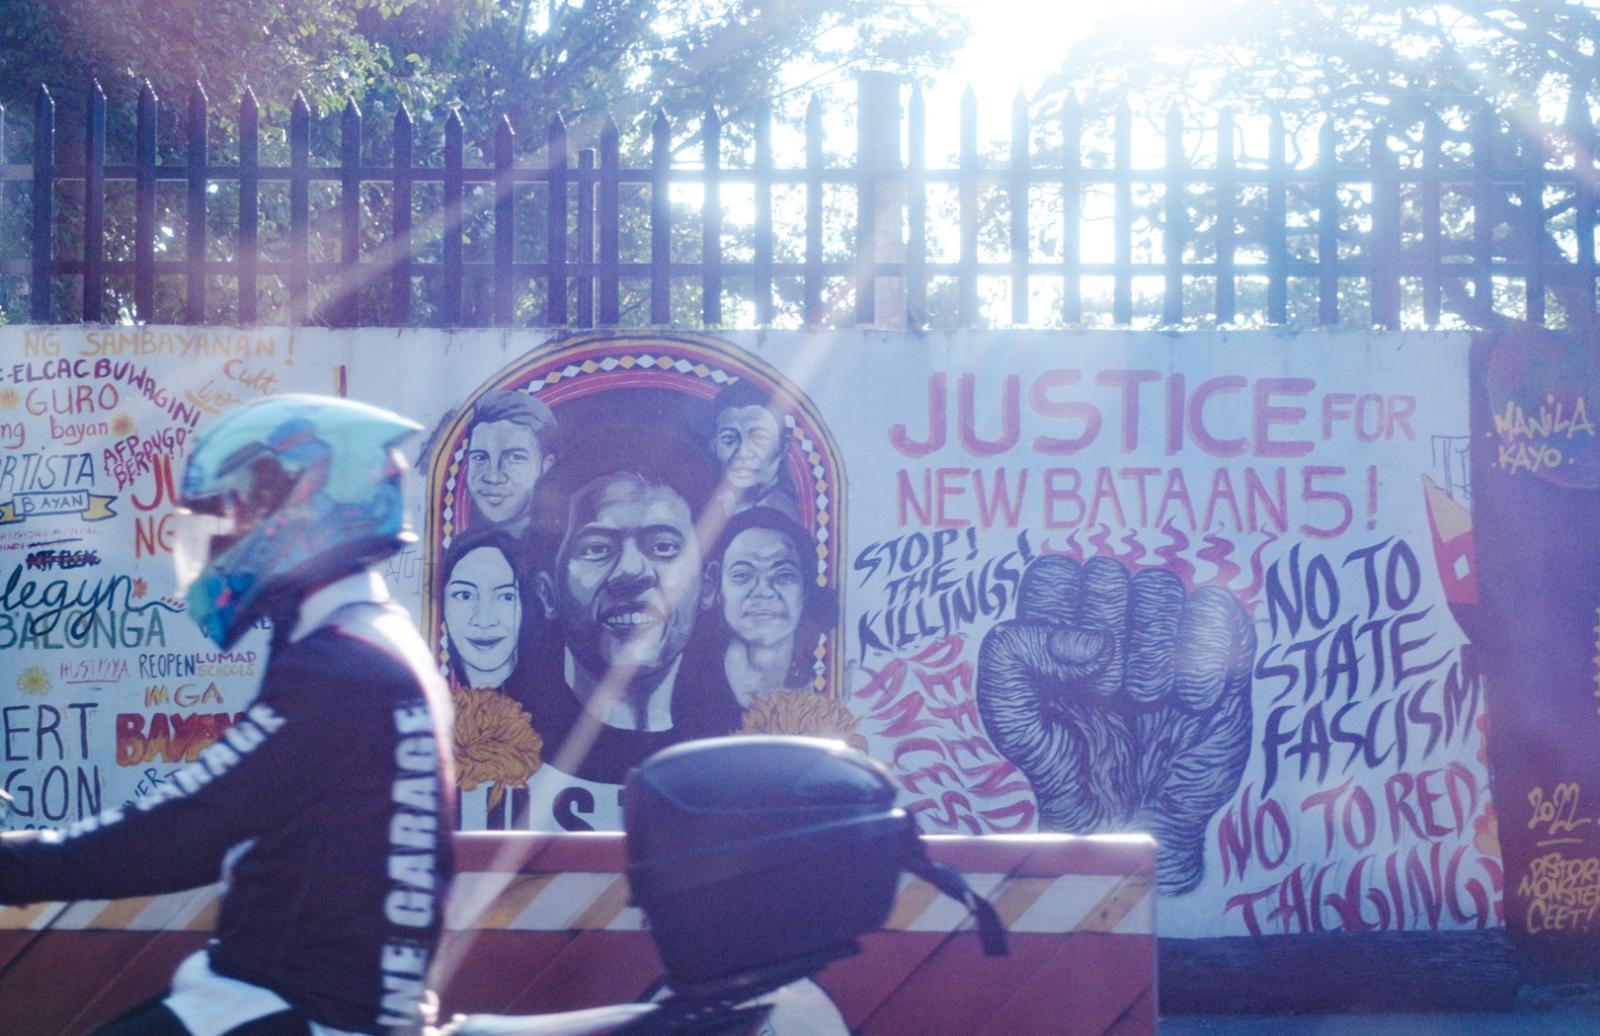 Graffiti calling for Justice